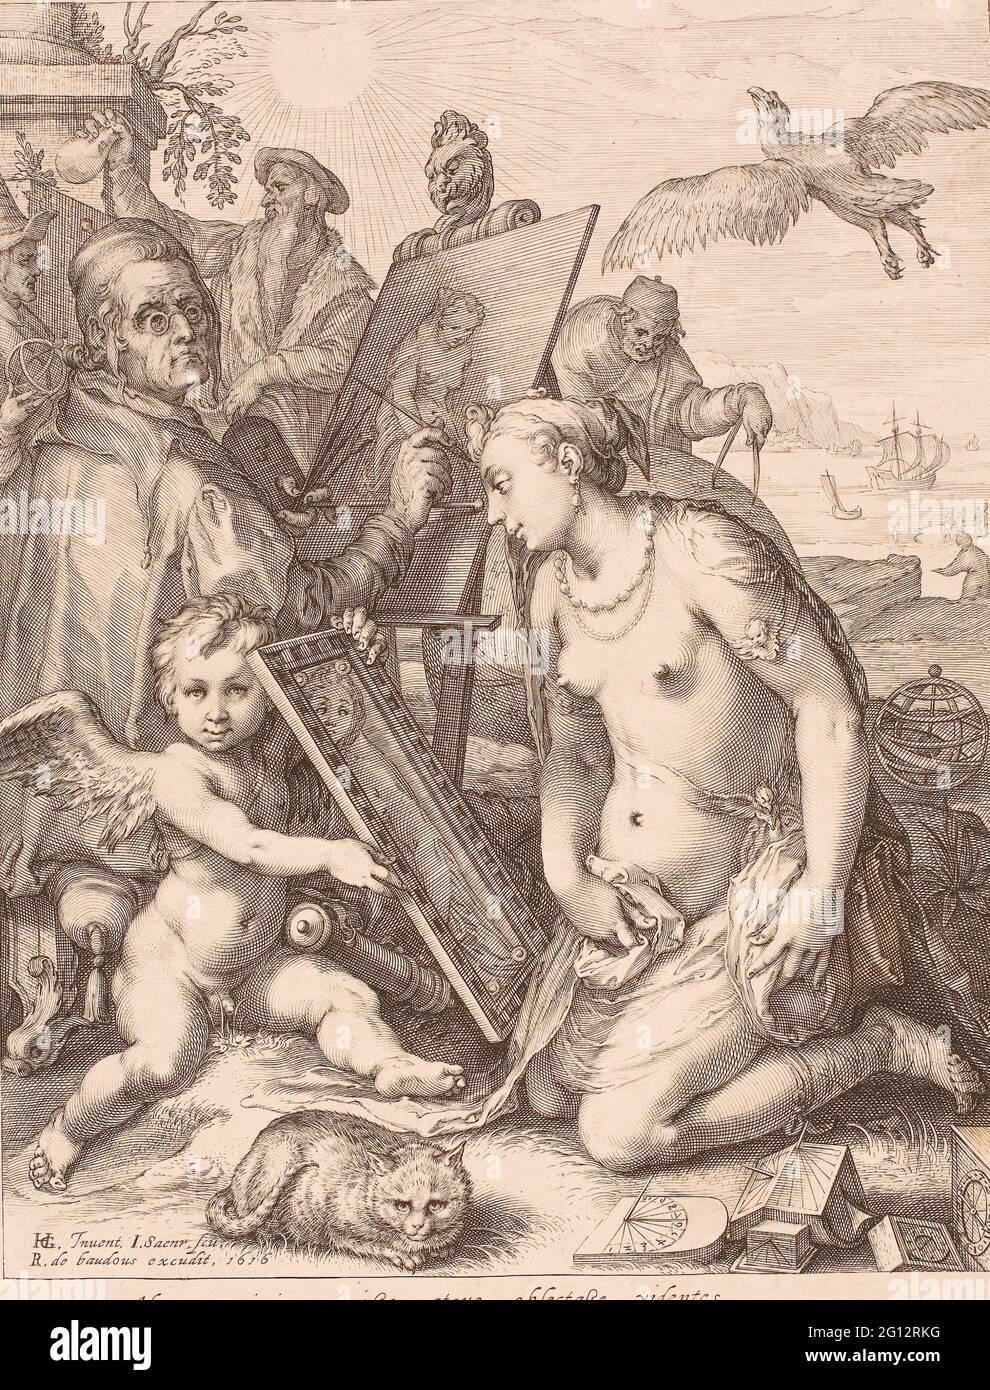 Jan Saenredam. The Painter - 1616 - Jan Saenredam (Netherlandish, 1565-1607) after Hendrick Goltzius (Dutch, 1558-1617). Engraving on paper. Stock Photo